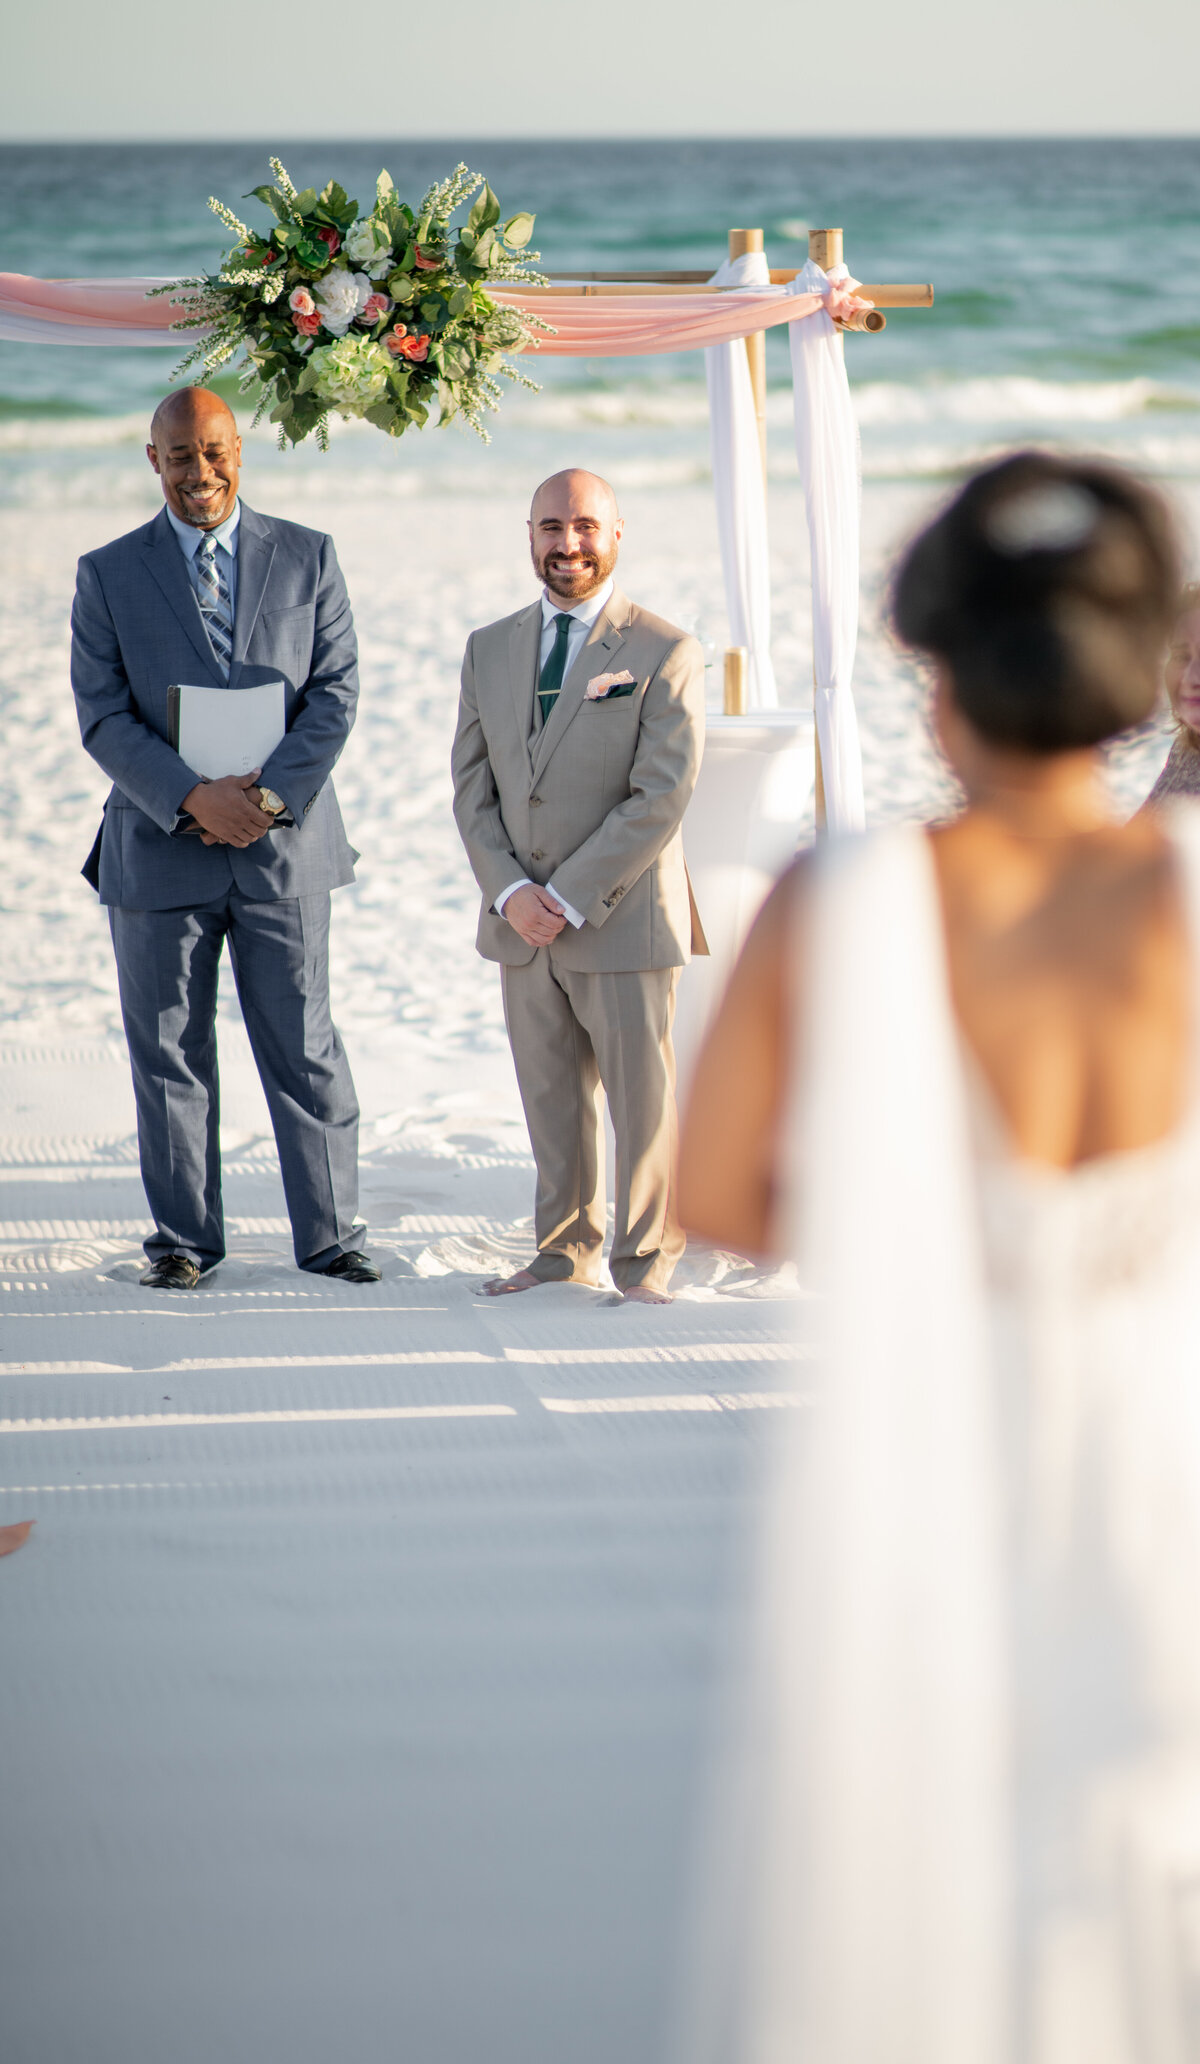 First look durig a beach wedding in fort walton Florida